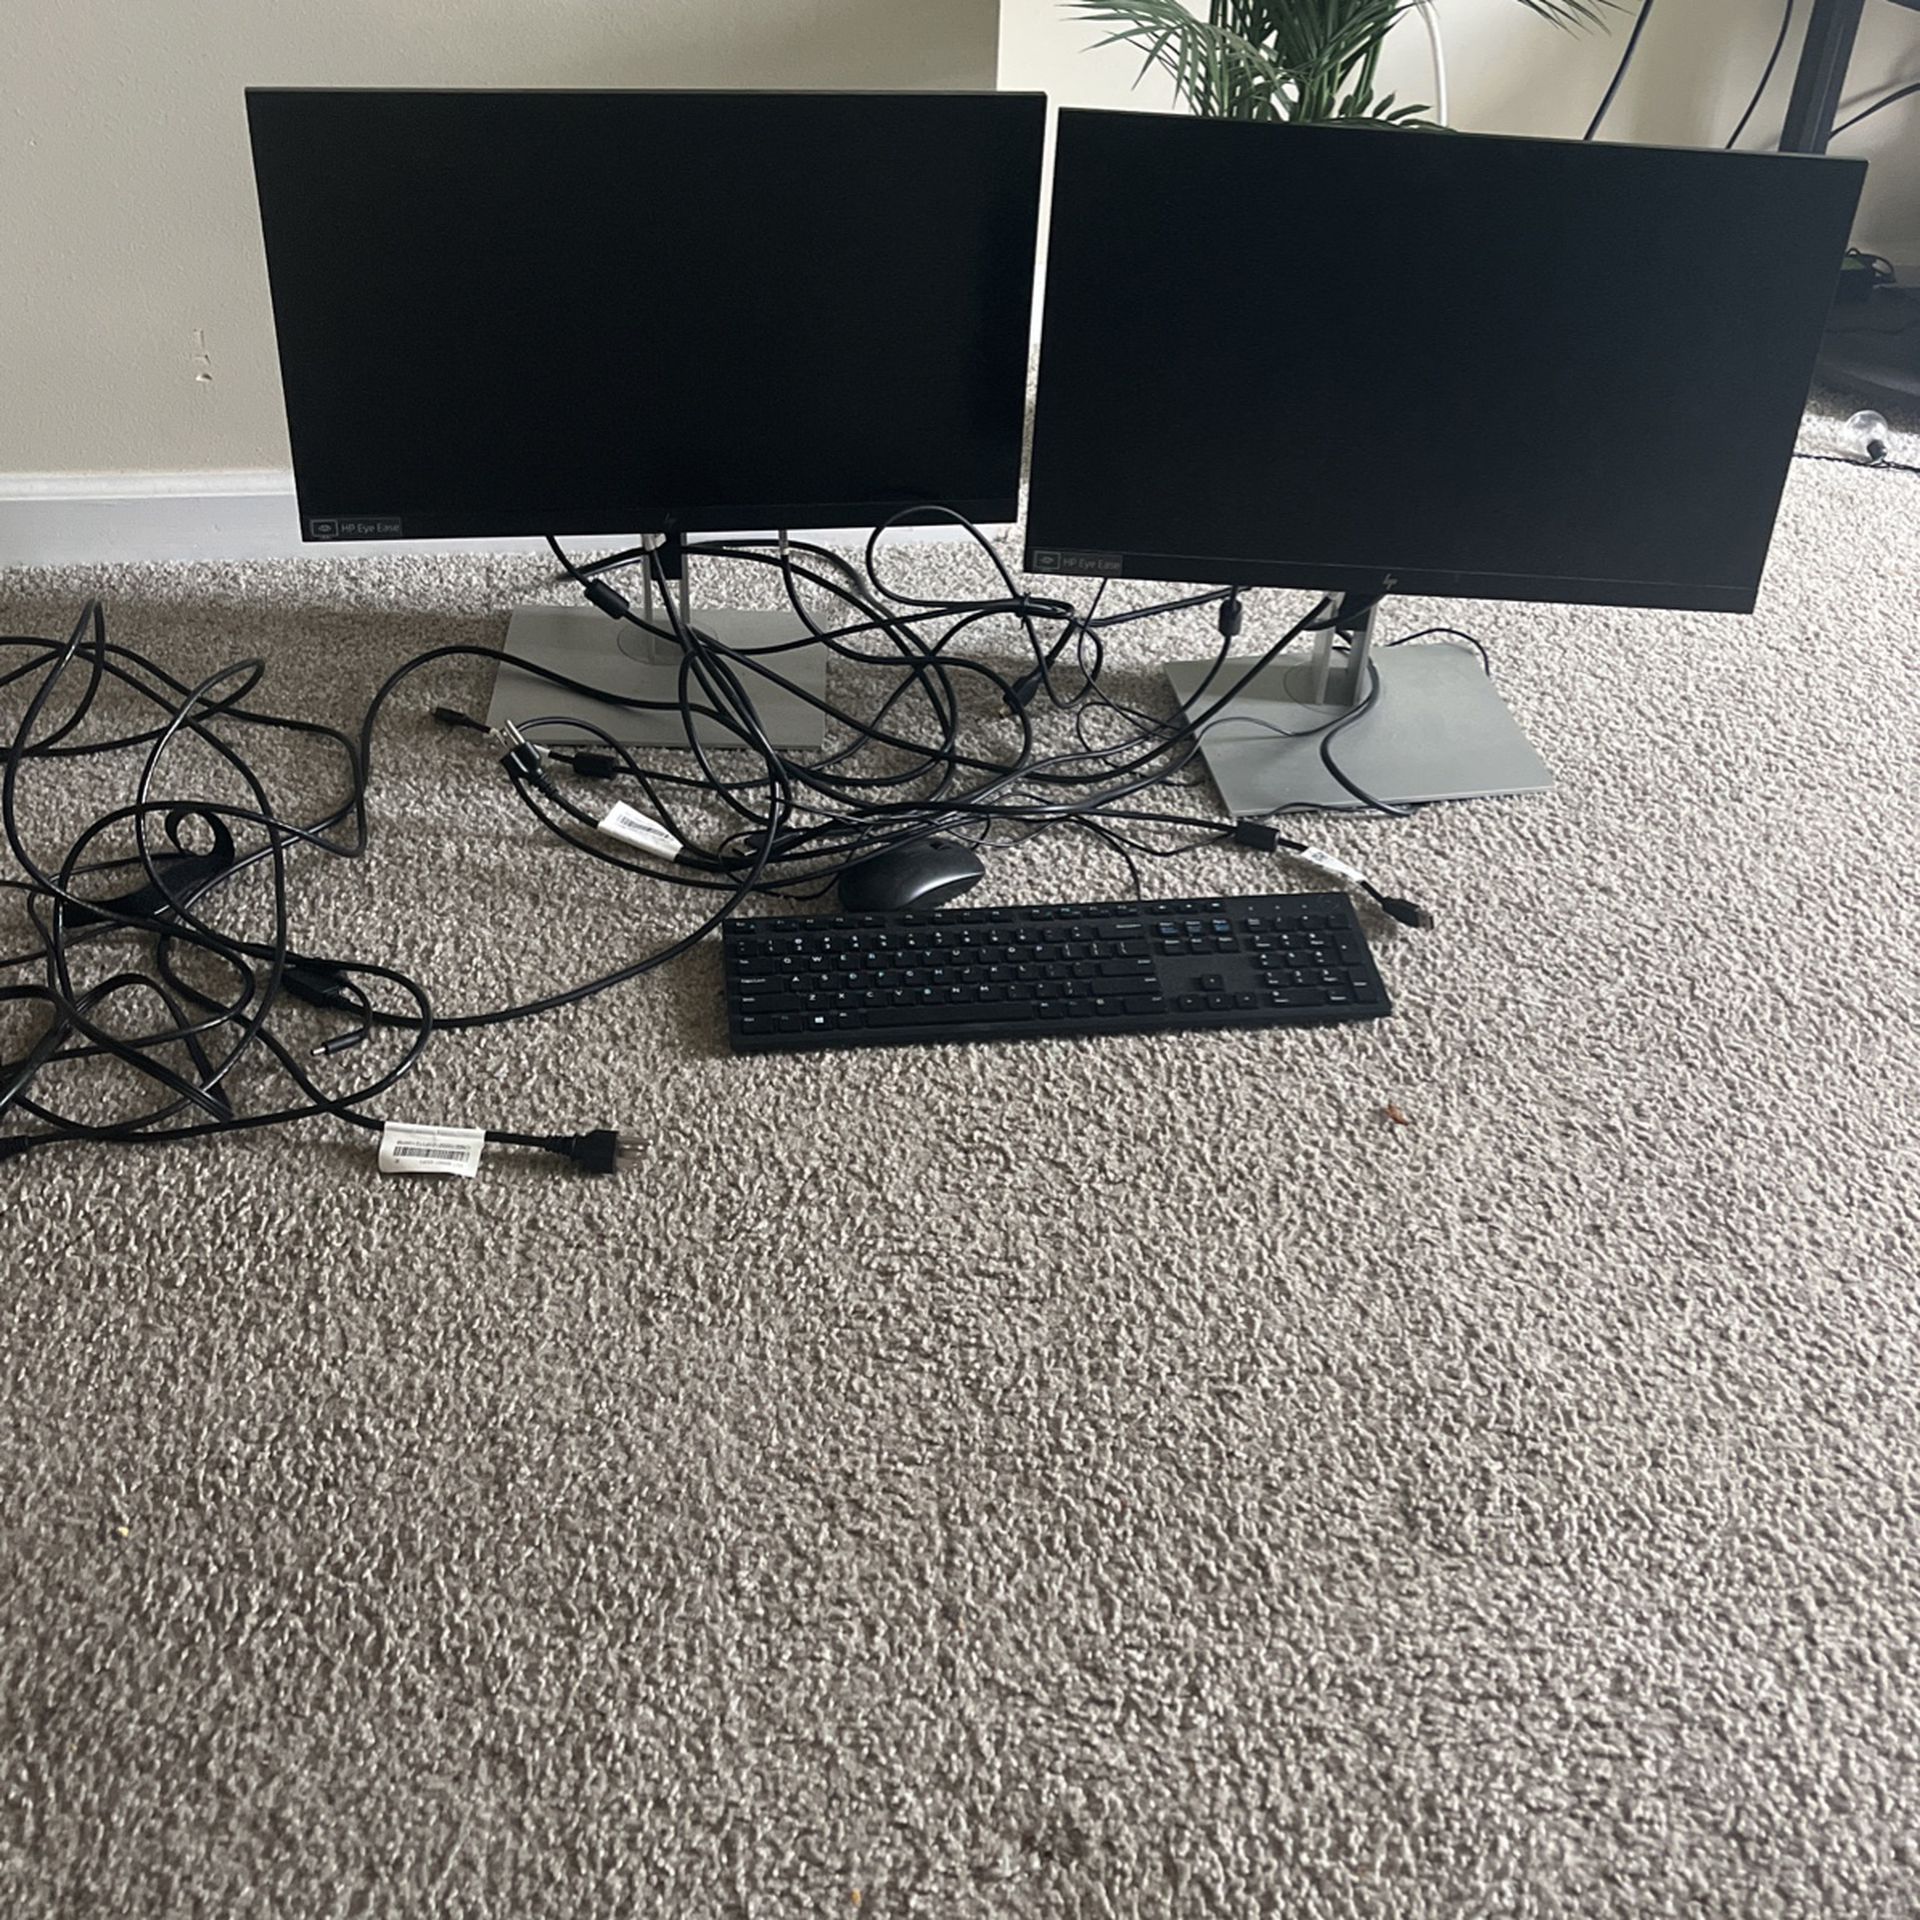 New Dual Computer Monitor 